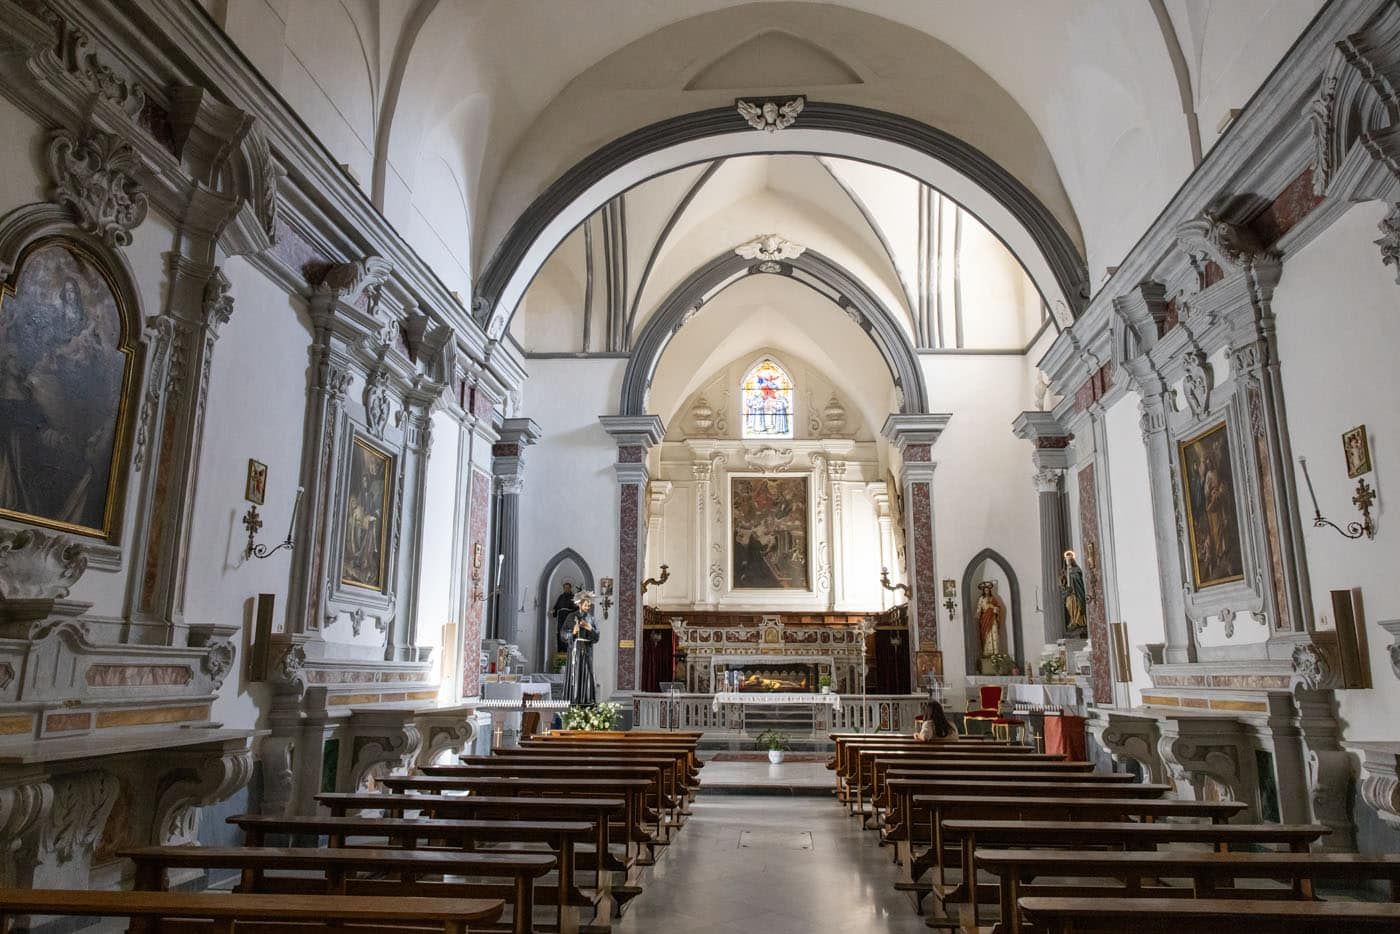 Inside the Ravello Duomo